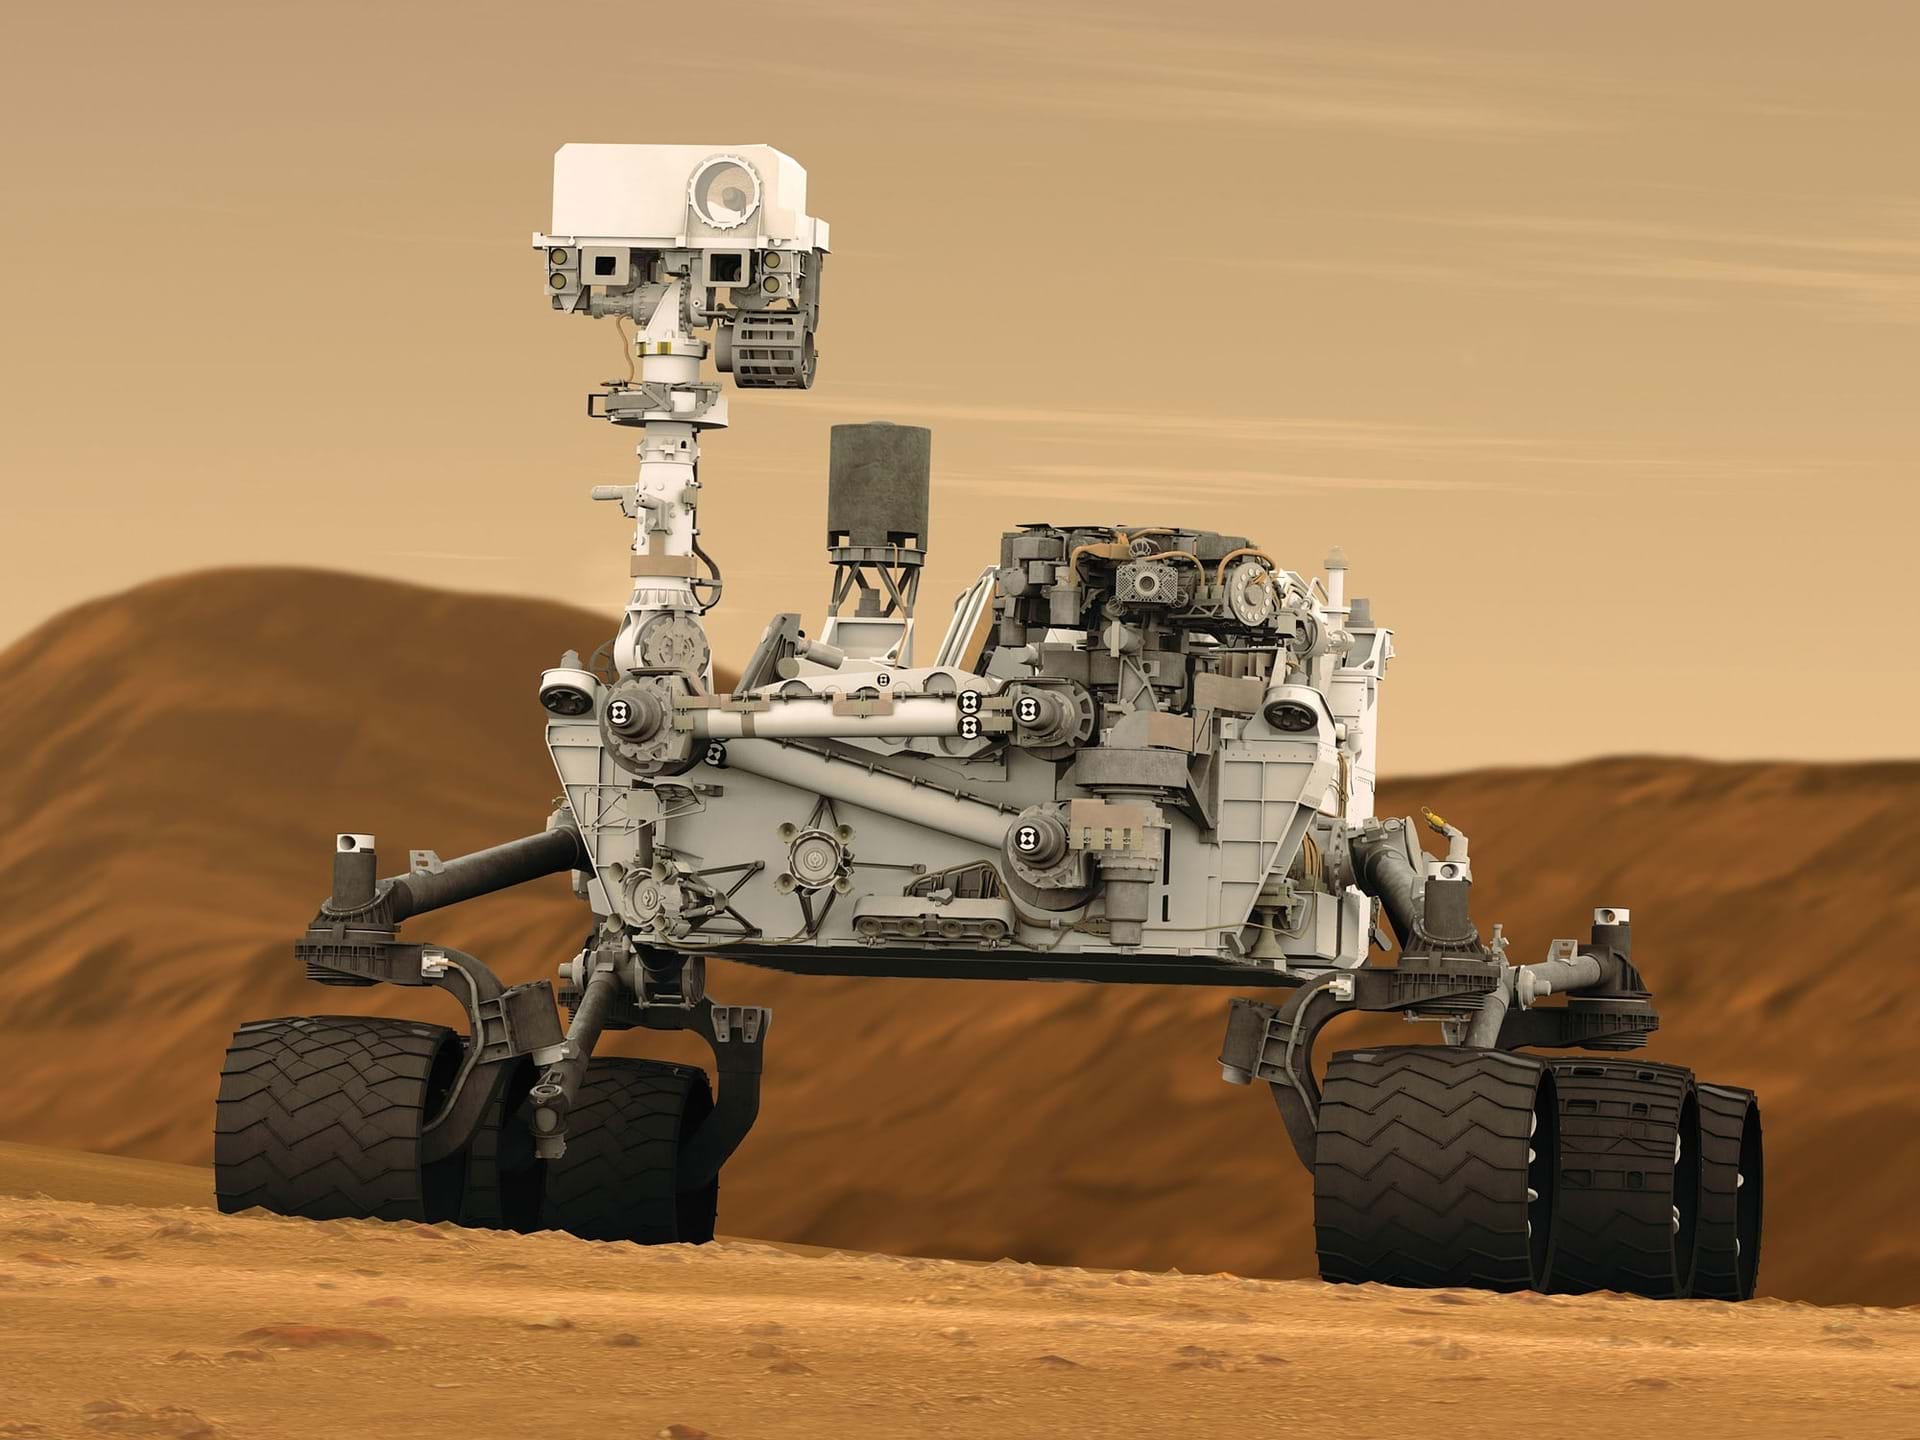 NASA's Mars Rover Curiosity